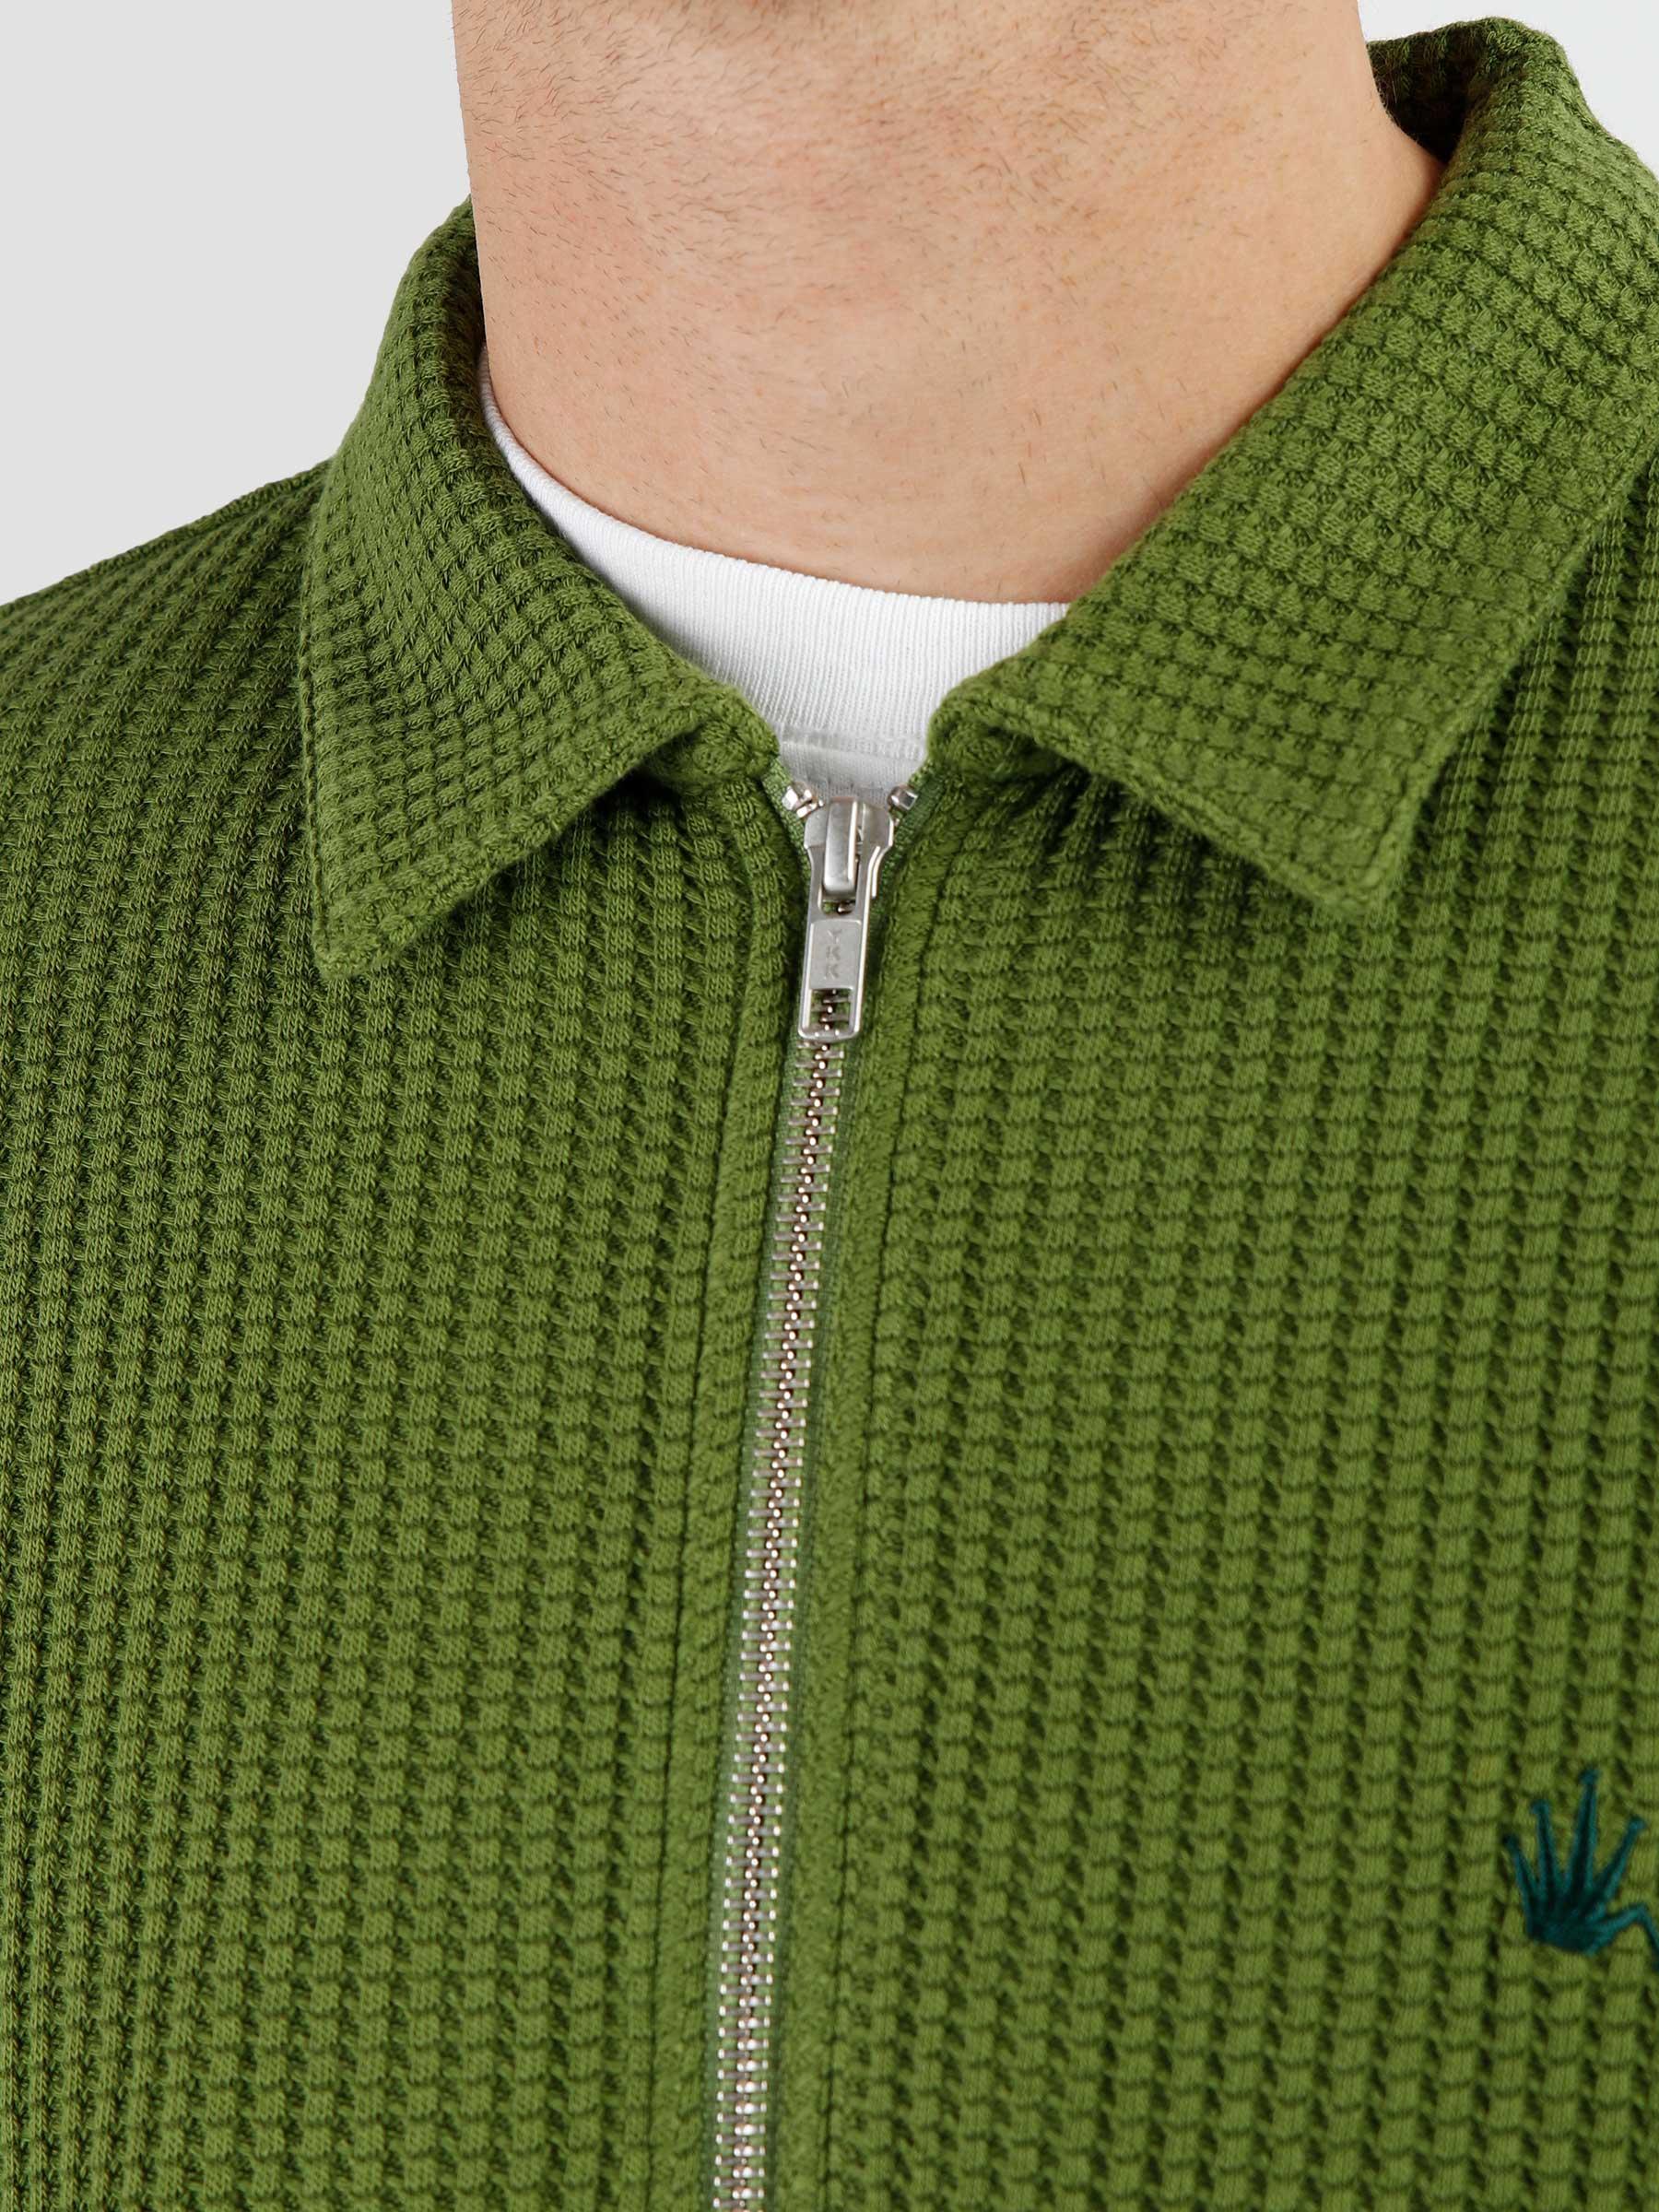 Stussy Big Thermal Zip Shirt Green - Freshcotton